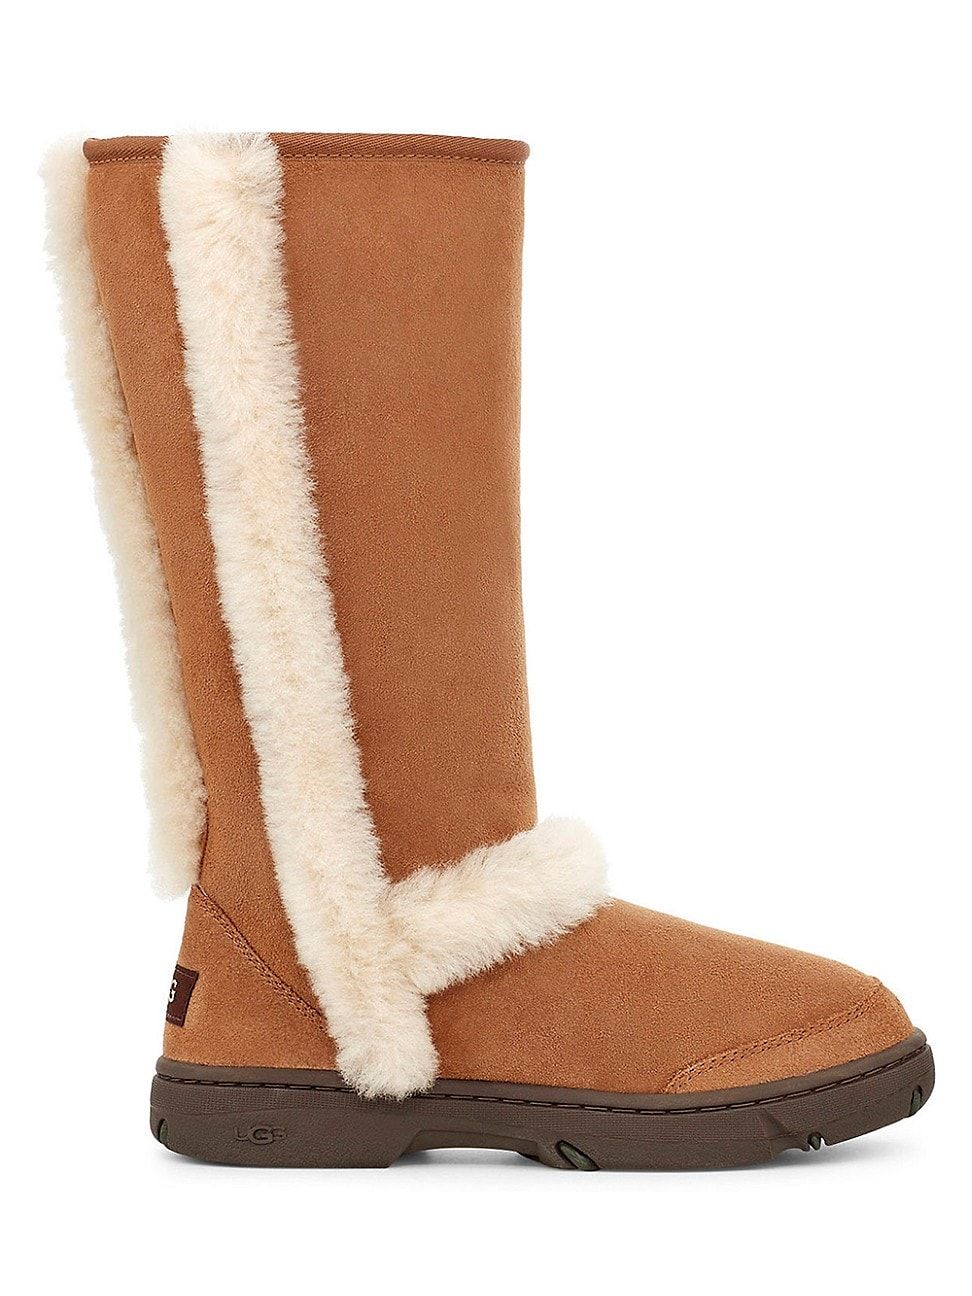 Women's Sunburst Suede & Fur Tall Boots - Chestnut - Size 5 | Saks Fifth Avenue